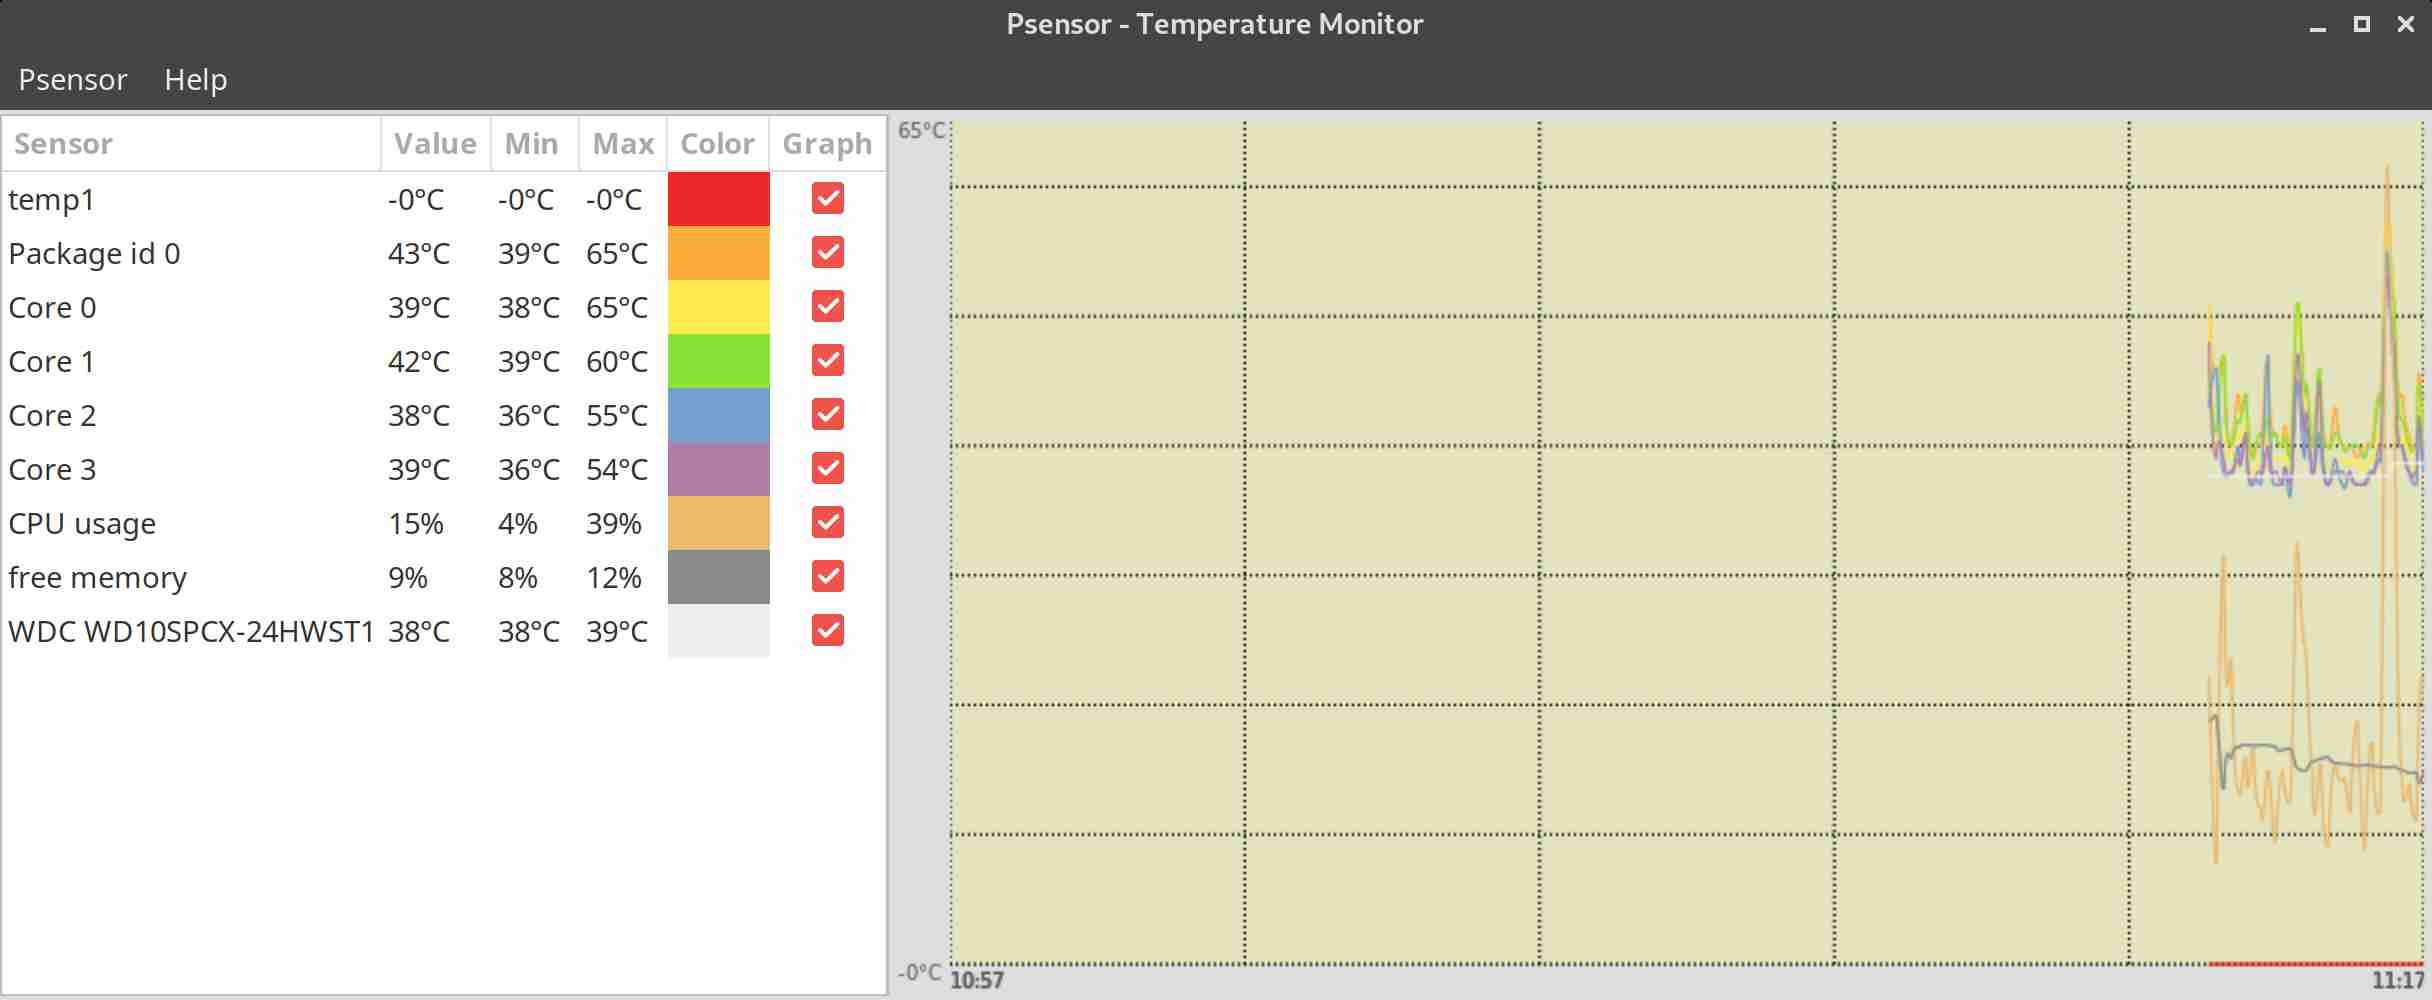 Temp linux. Температура жесткого диска Linux. Psensor. "System temperature Monitor". Sensor Temp CPU.